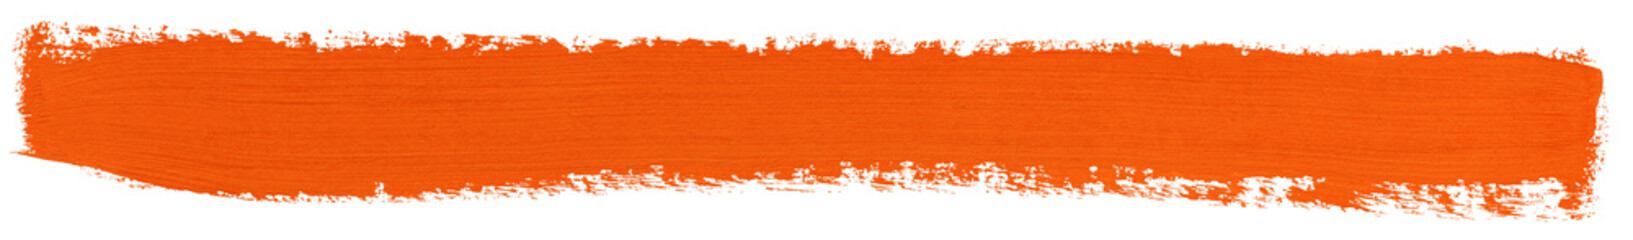 Orange stroke of paint isolated on transparent background